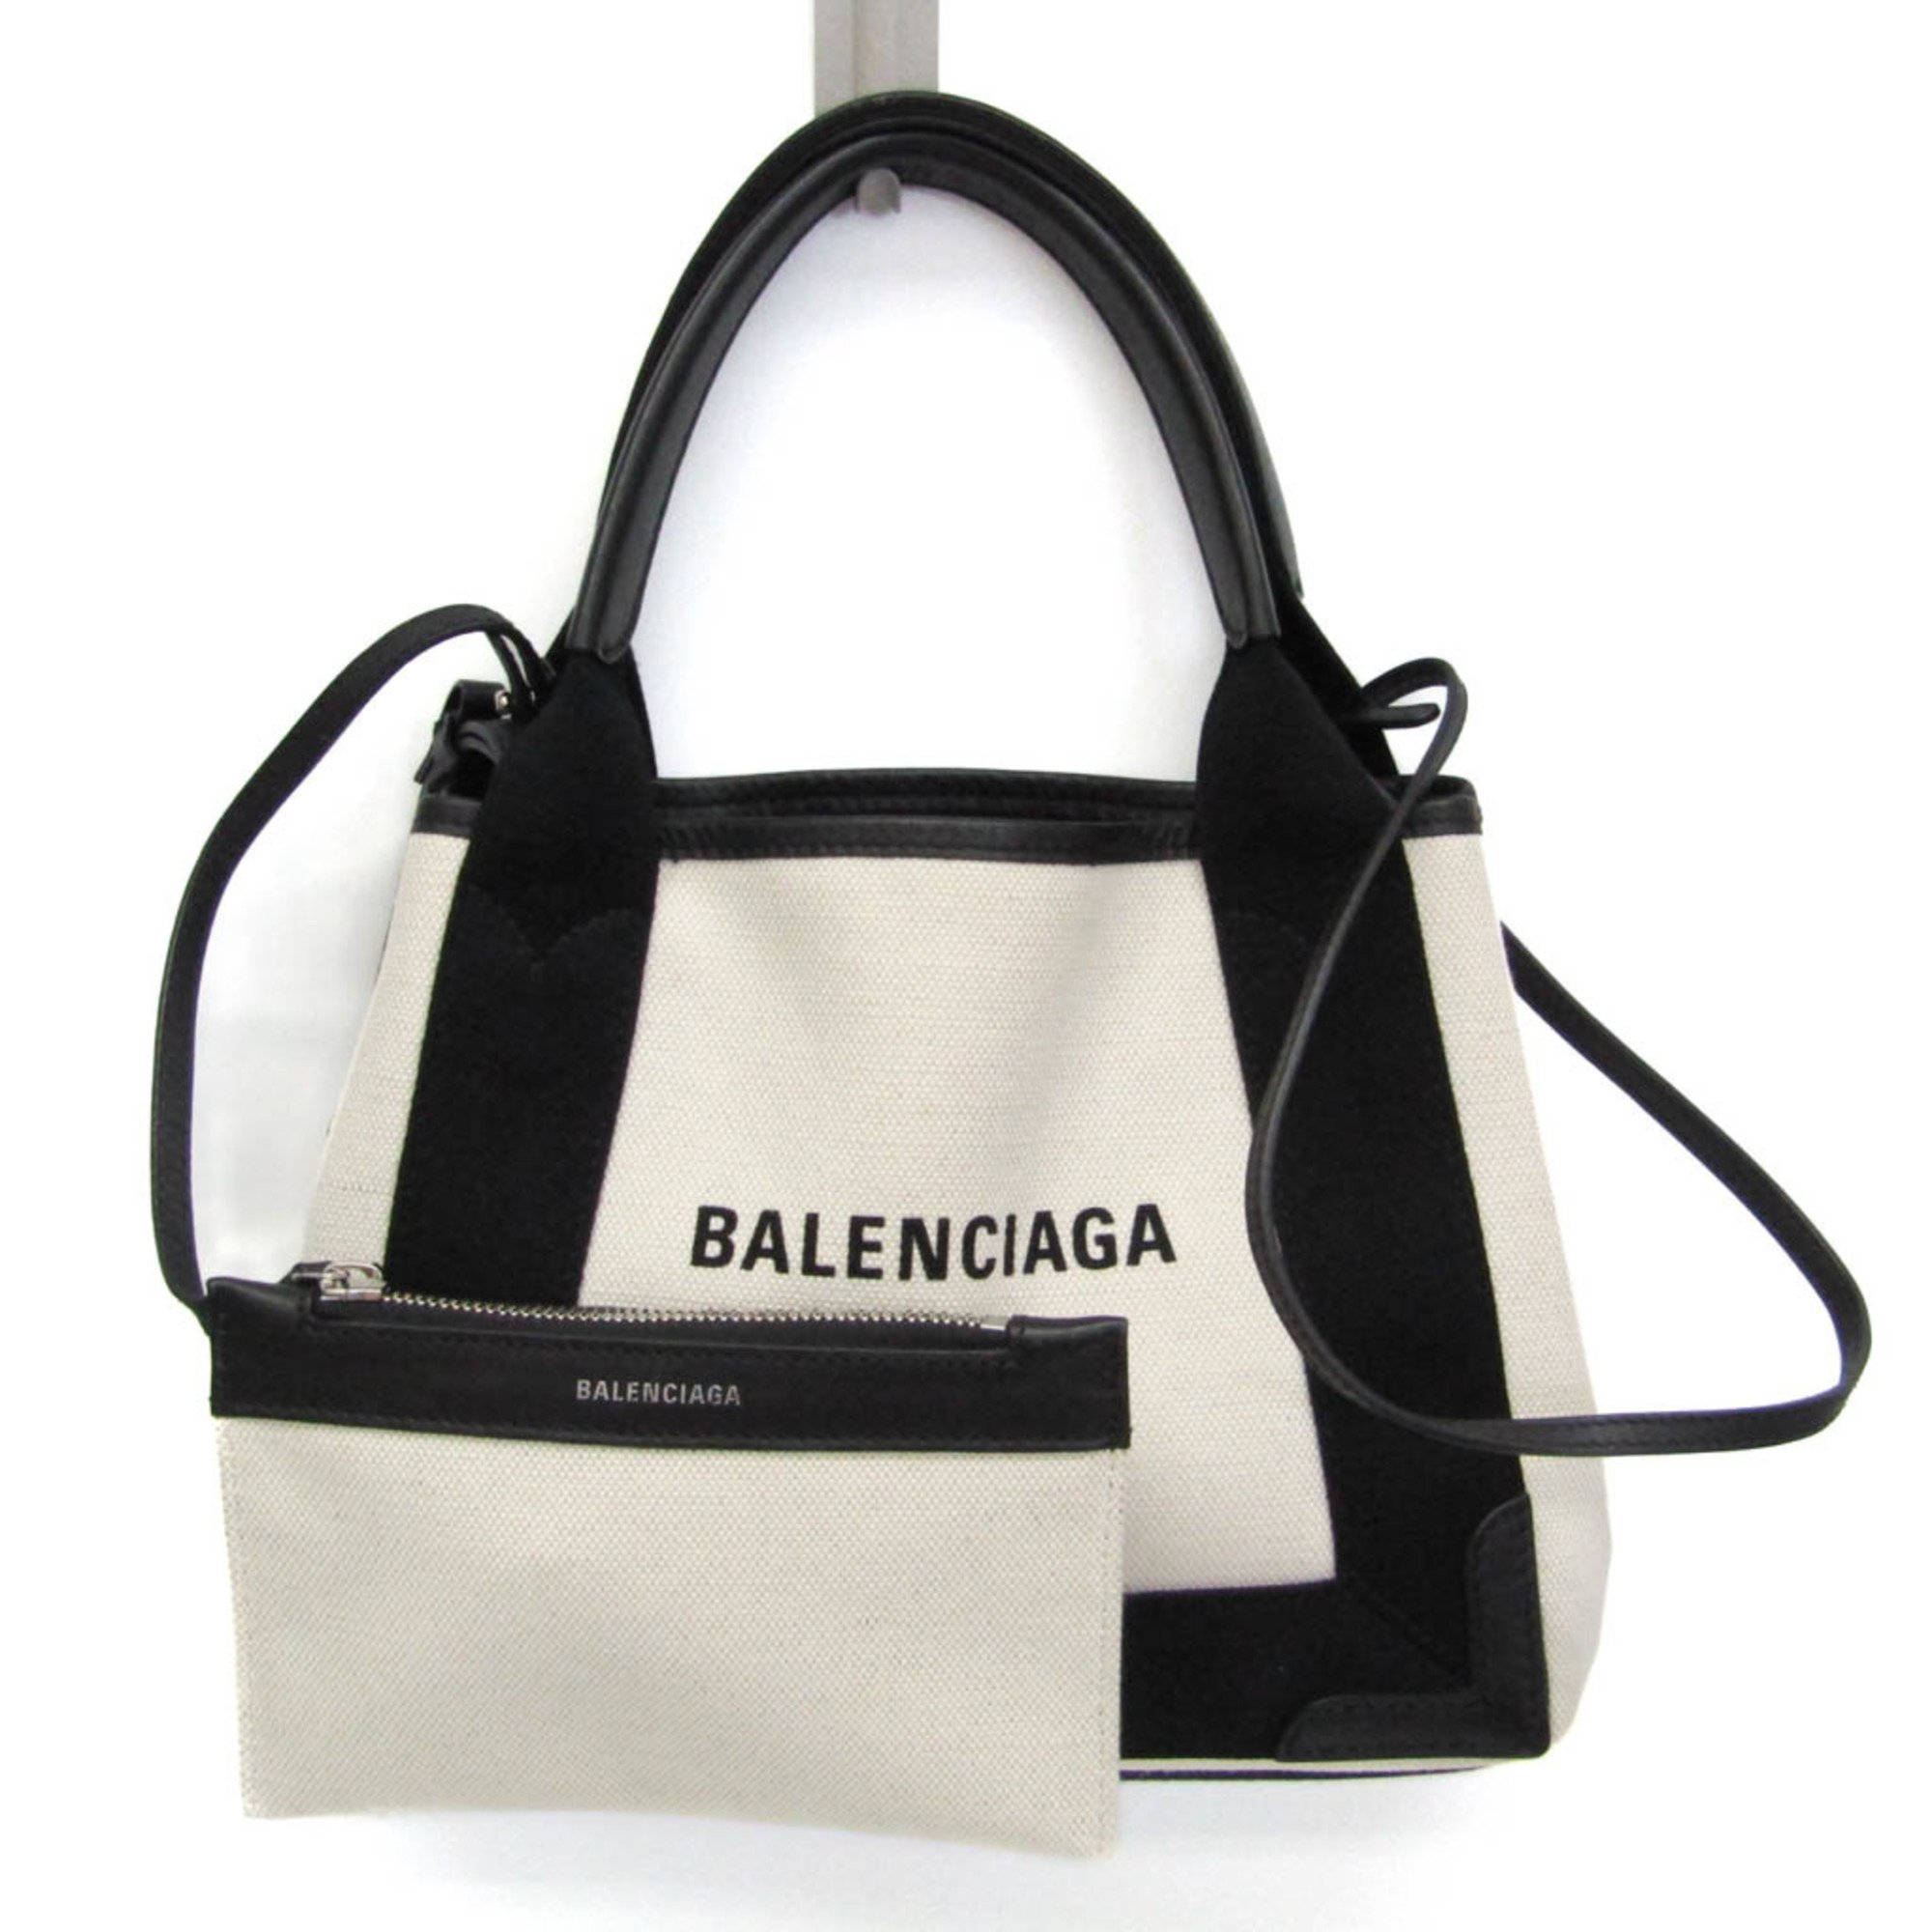 BALENCIAGA 黒キャンバスショルダー - バッグ